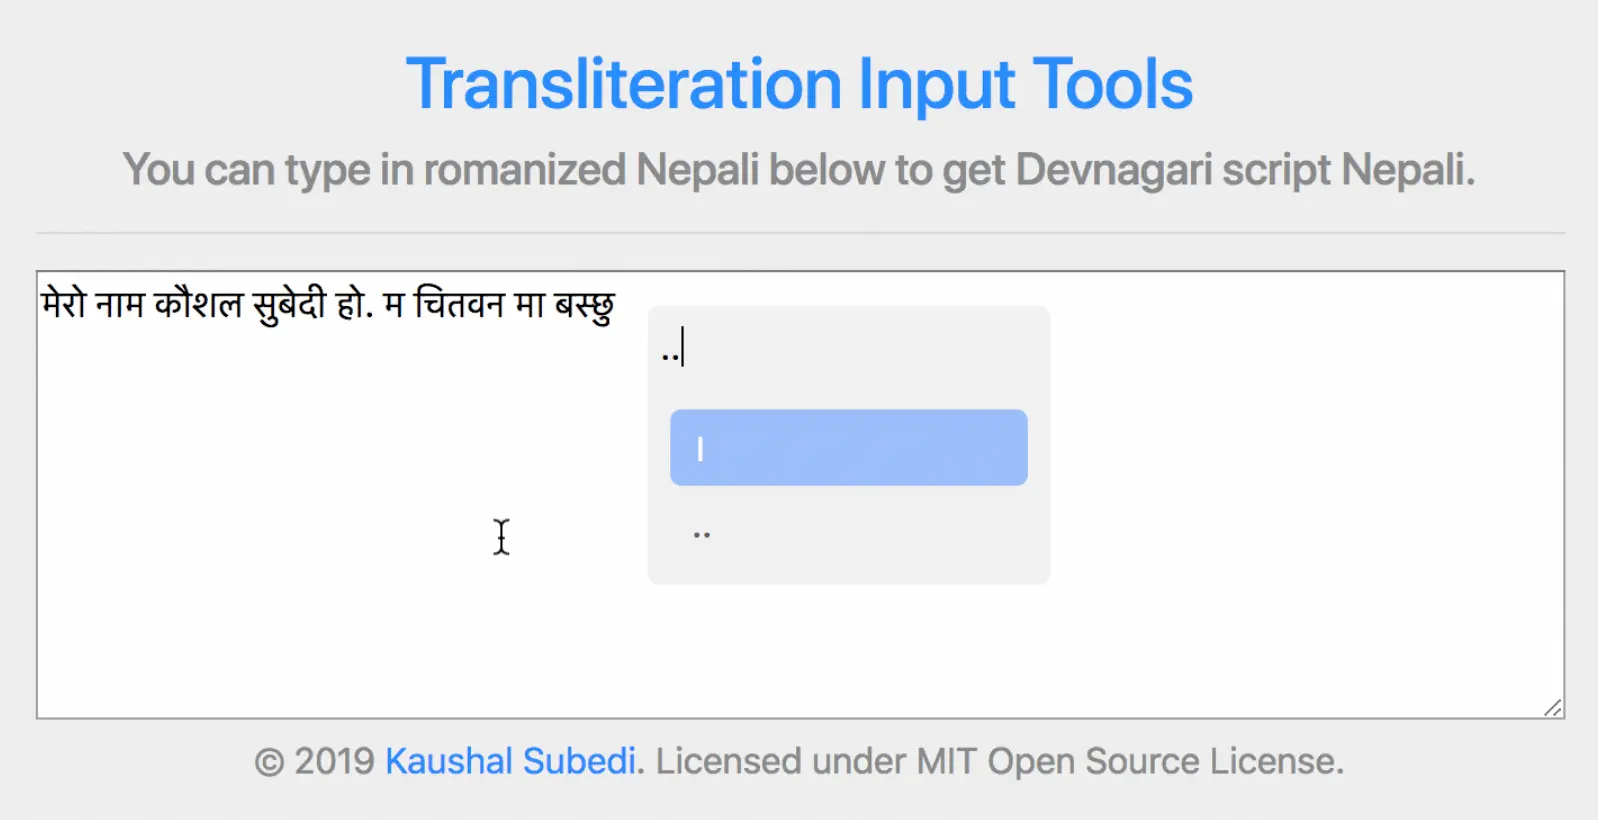 Transliteration Input Tools